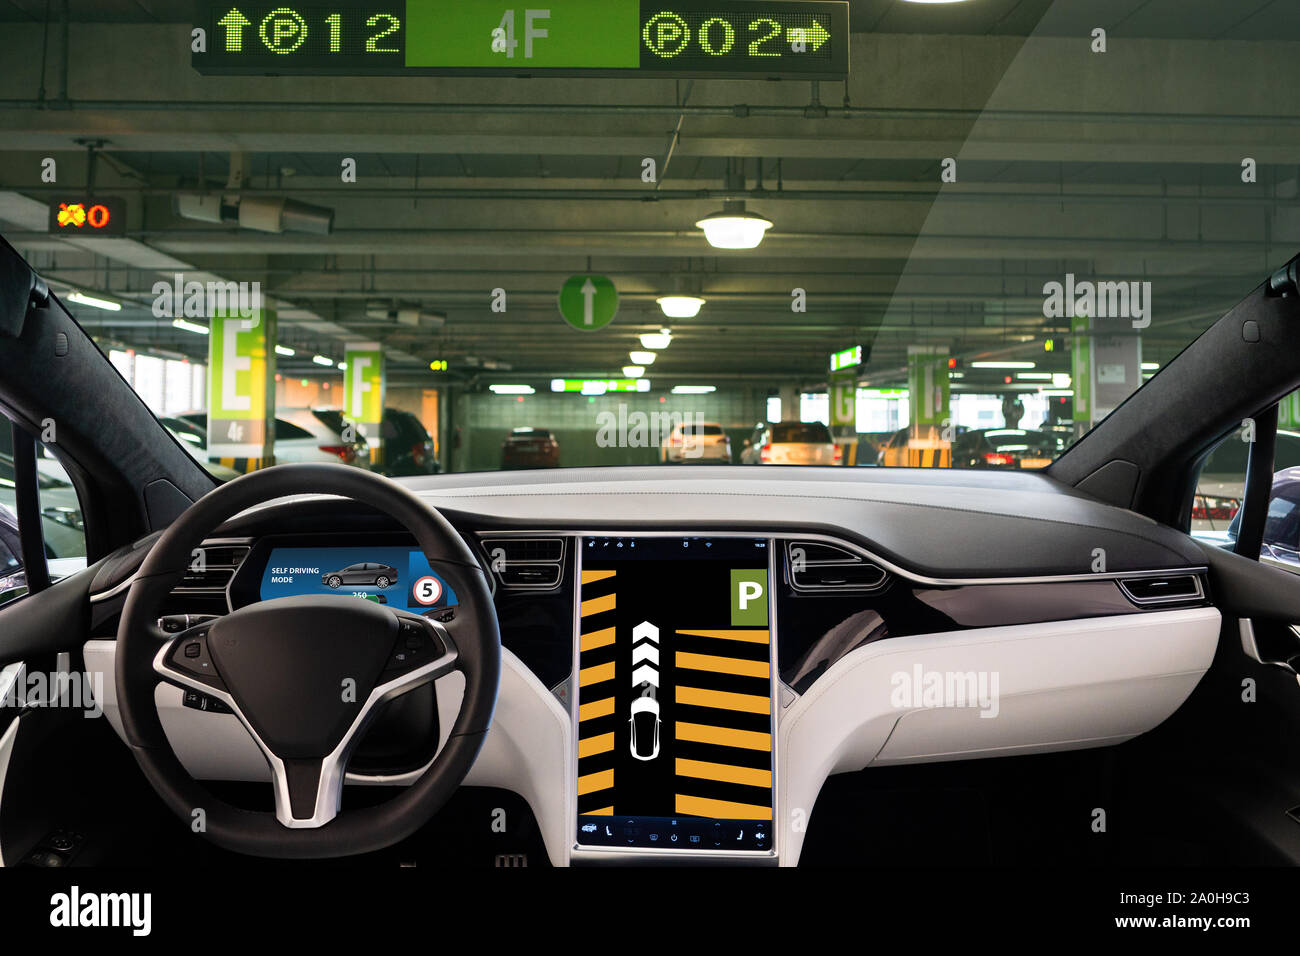 Selbstfahrer Auto parken im autonomen Modus Stockfoto